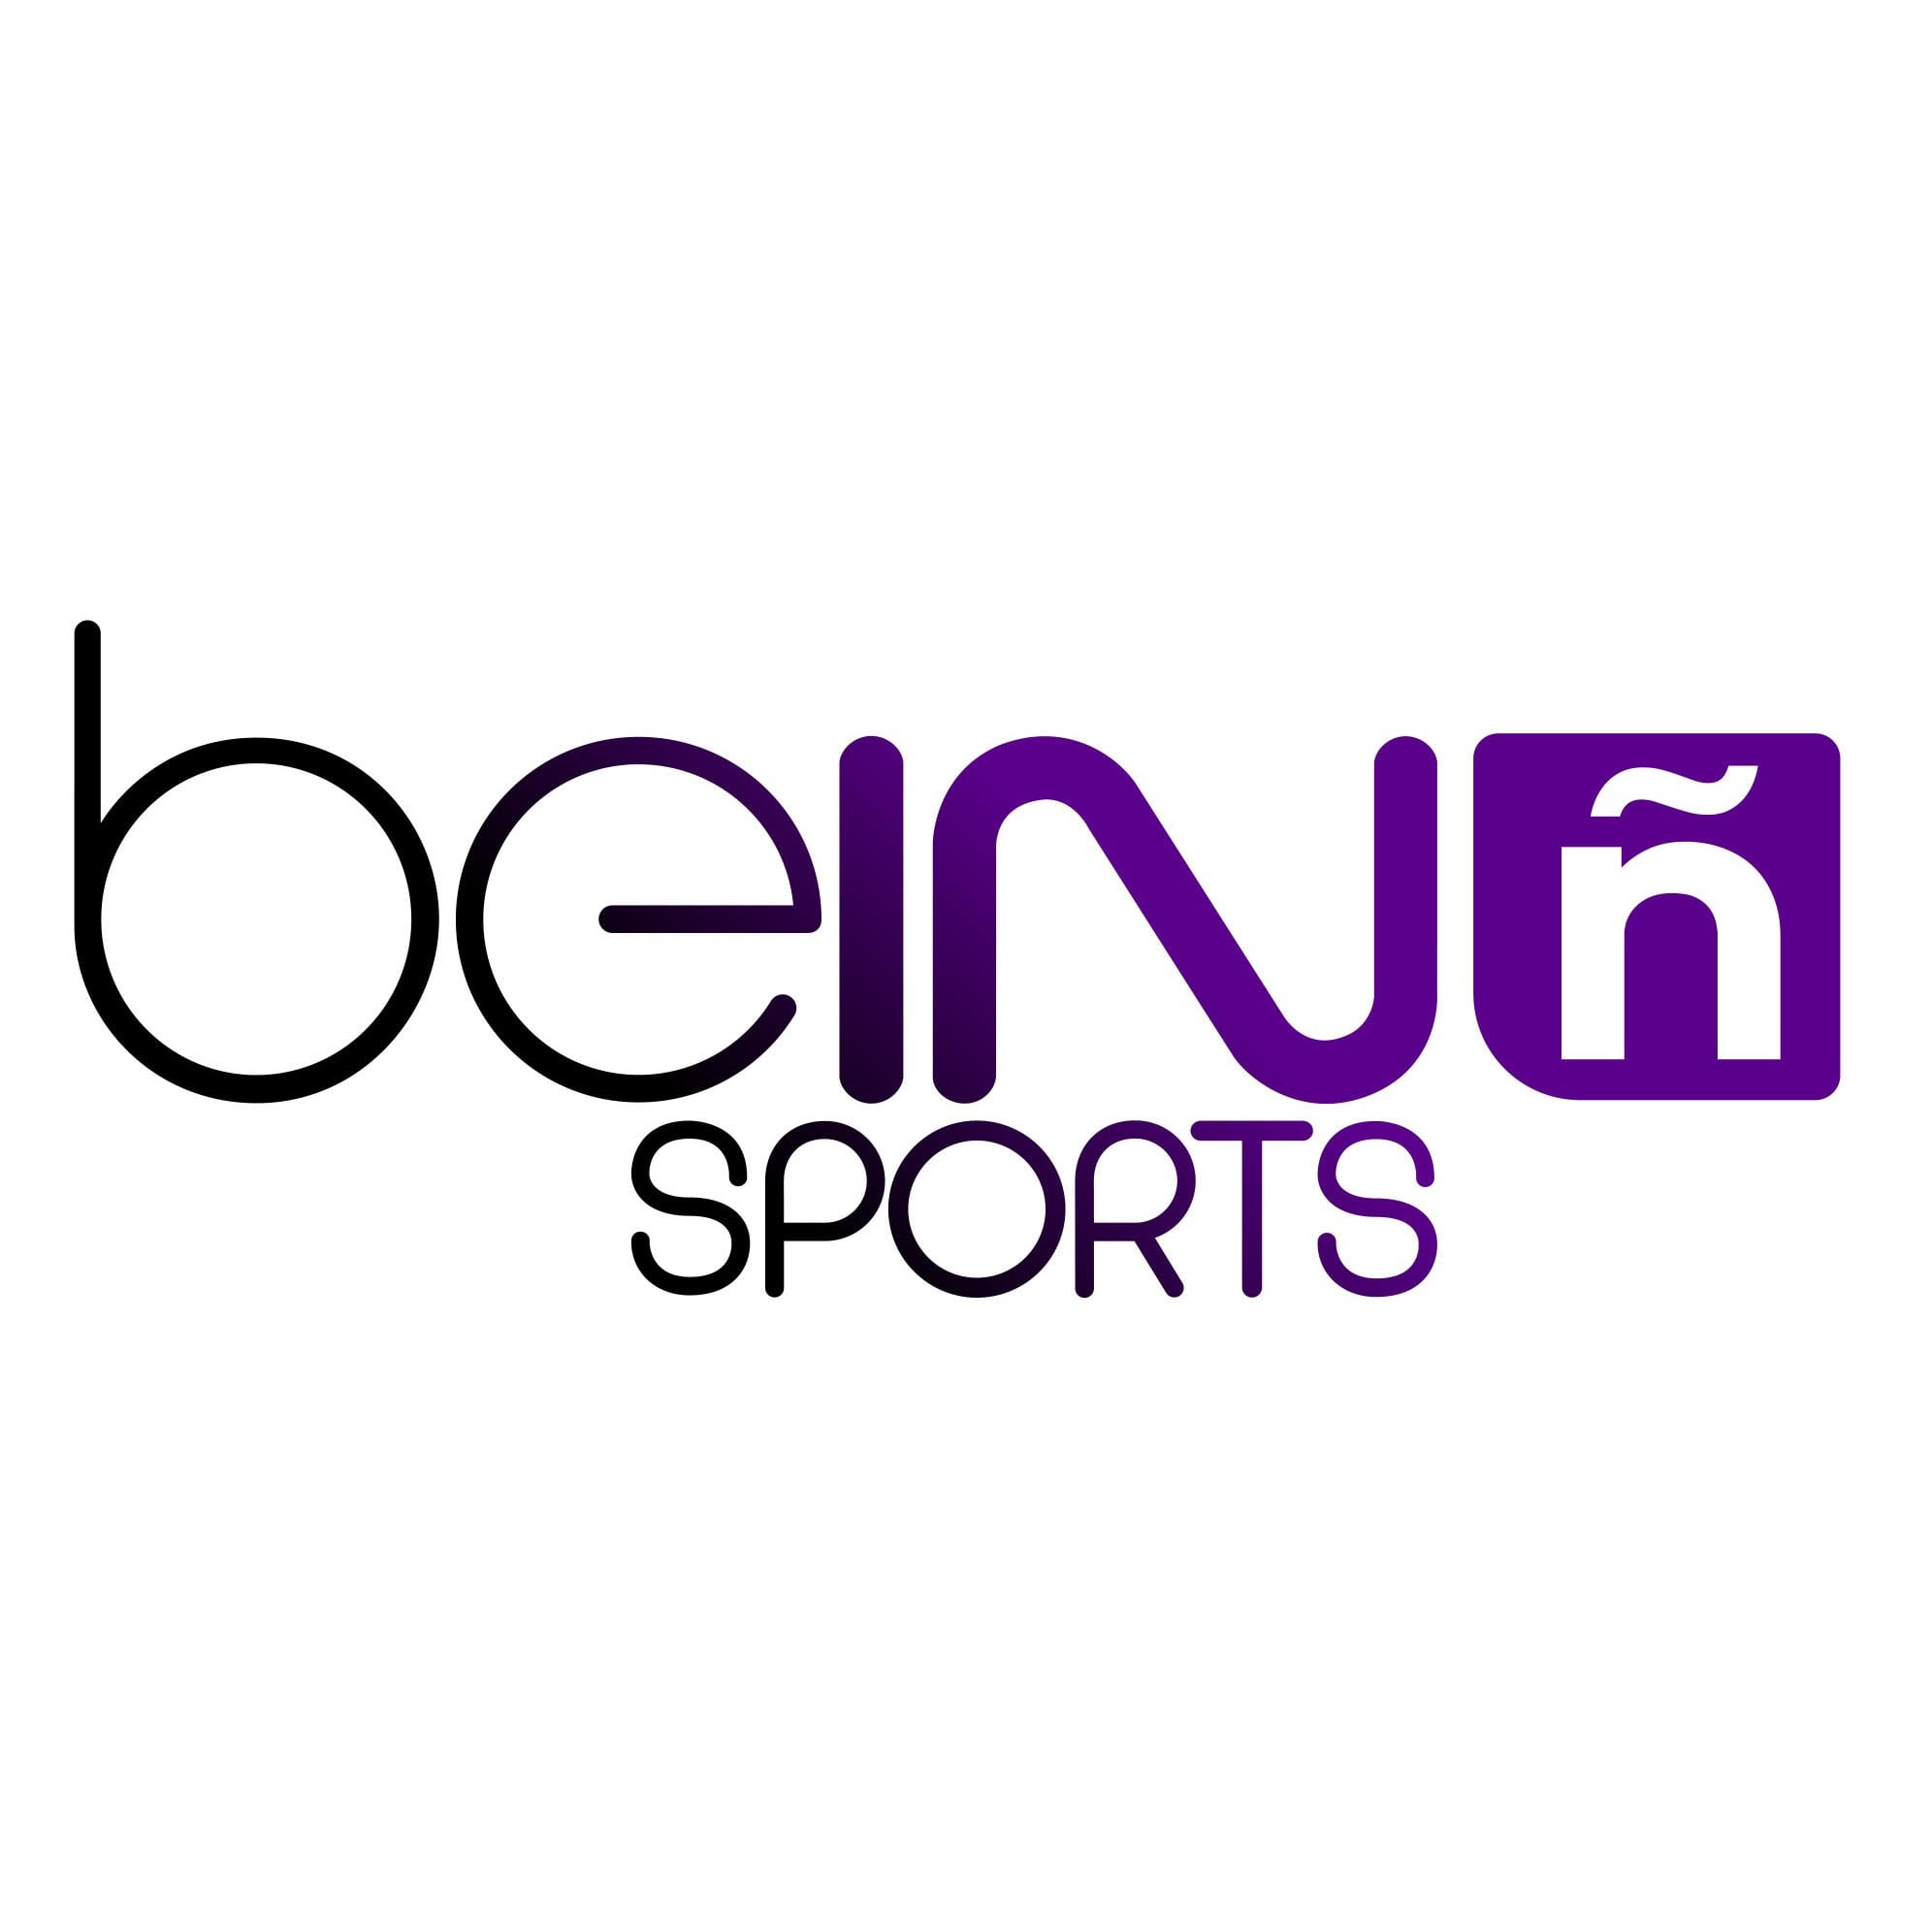 Bein sport streaming. Логотип Телеканал Bein Sports. Bein Sports Max 2. Bein Sport Max hd1.